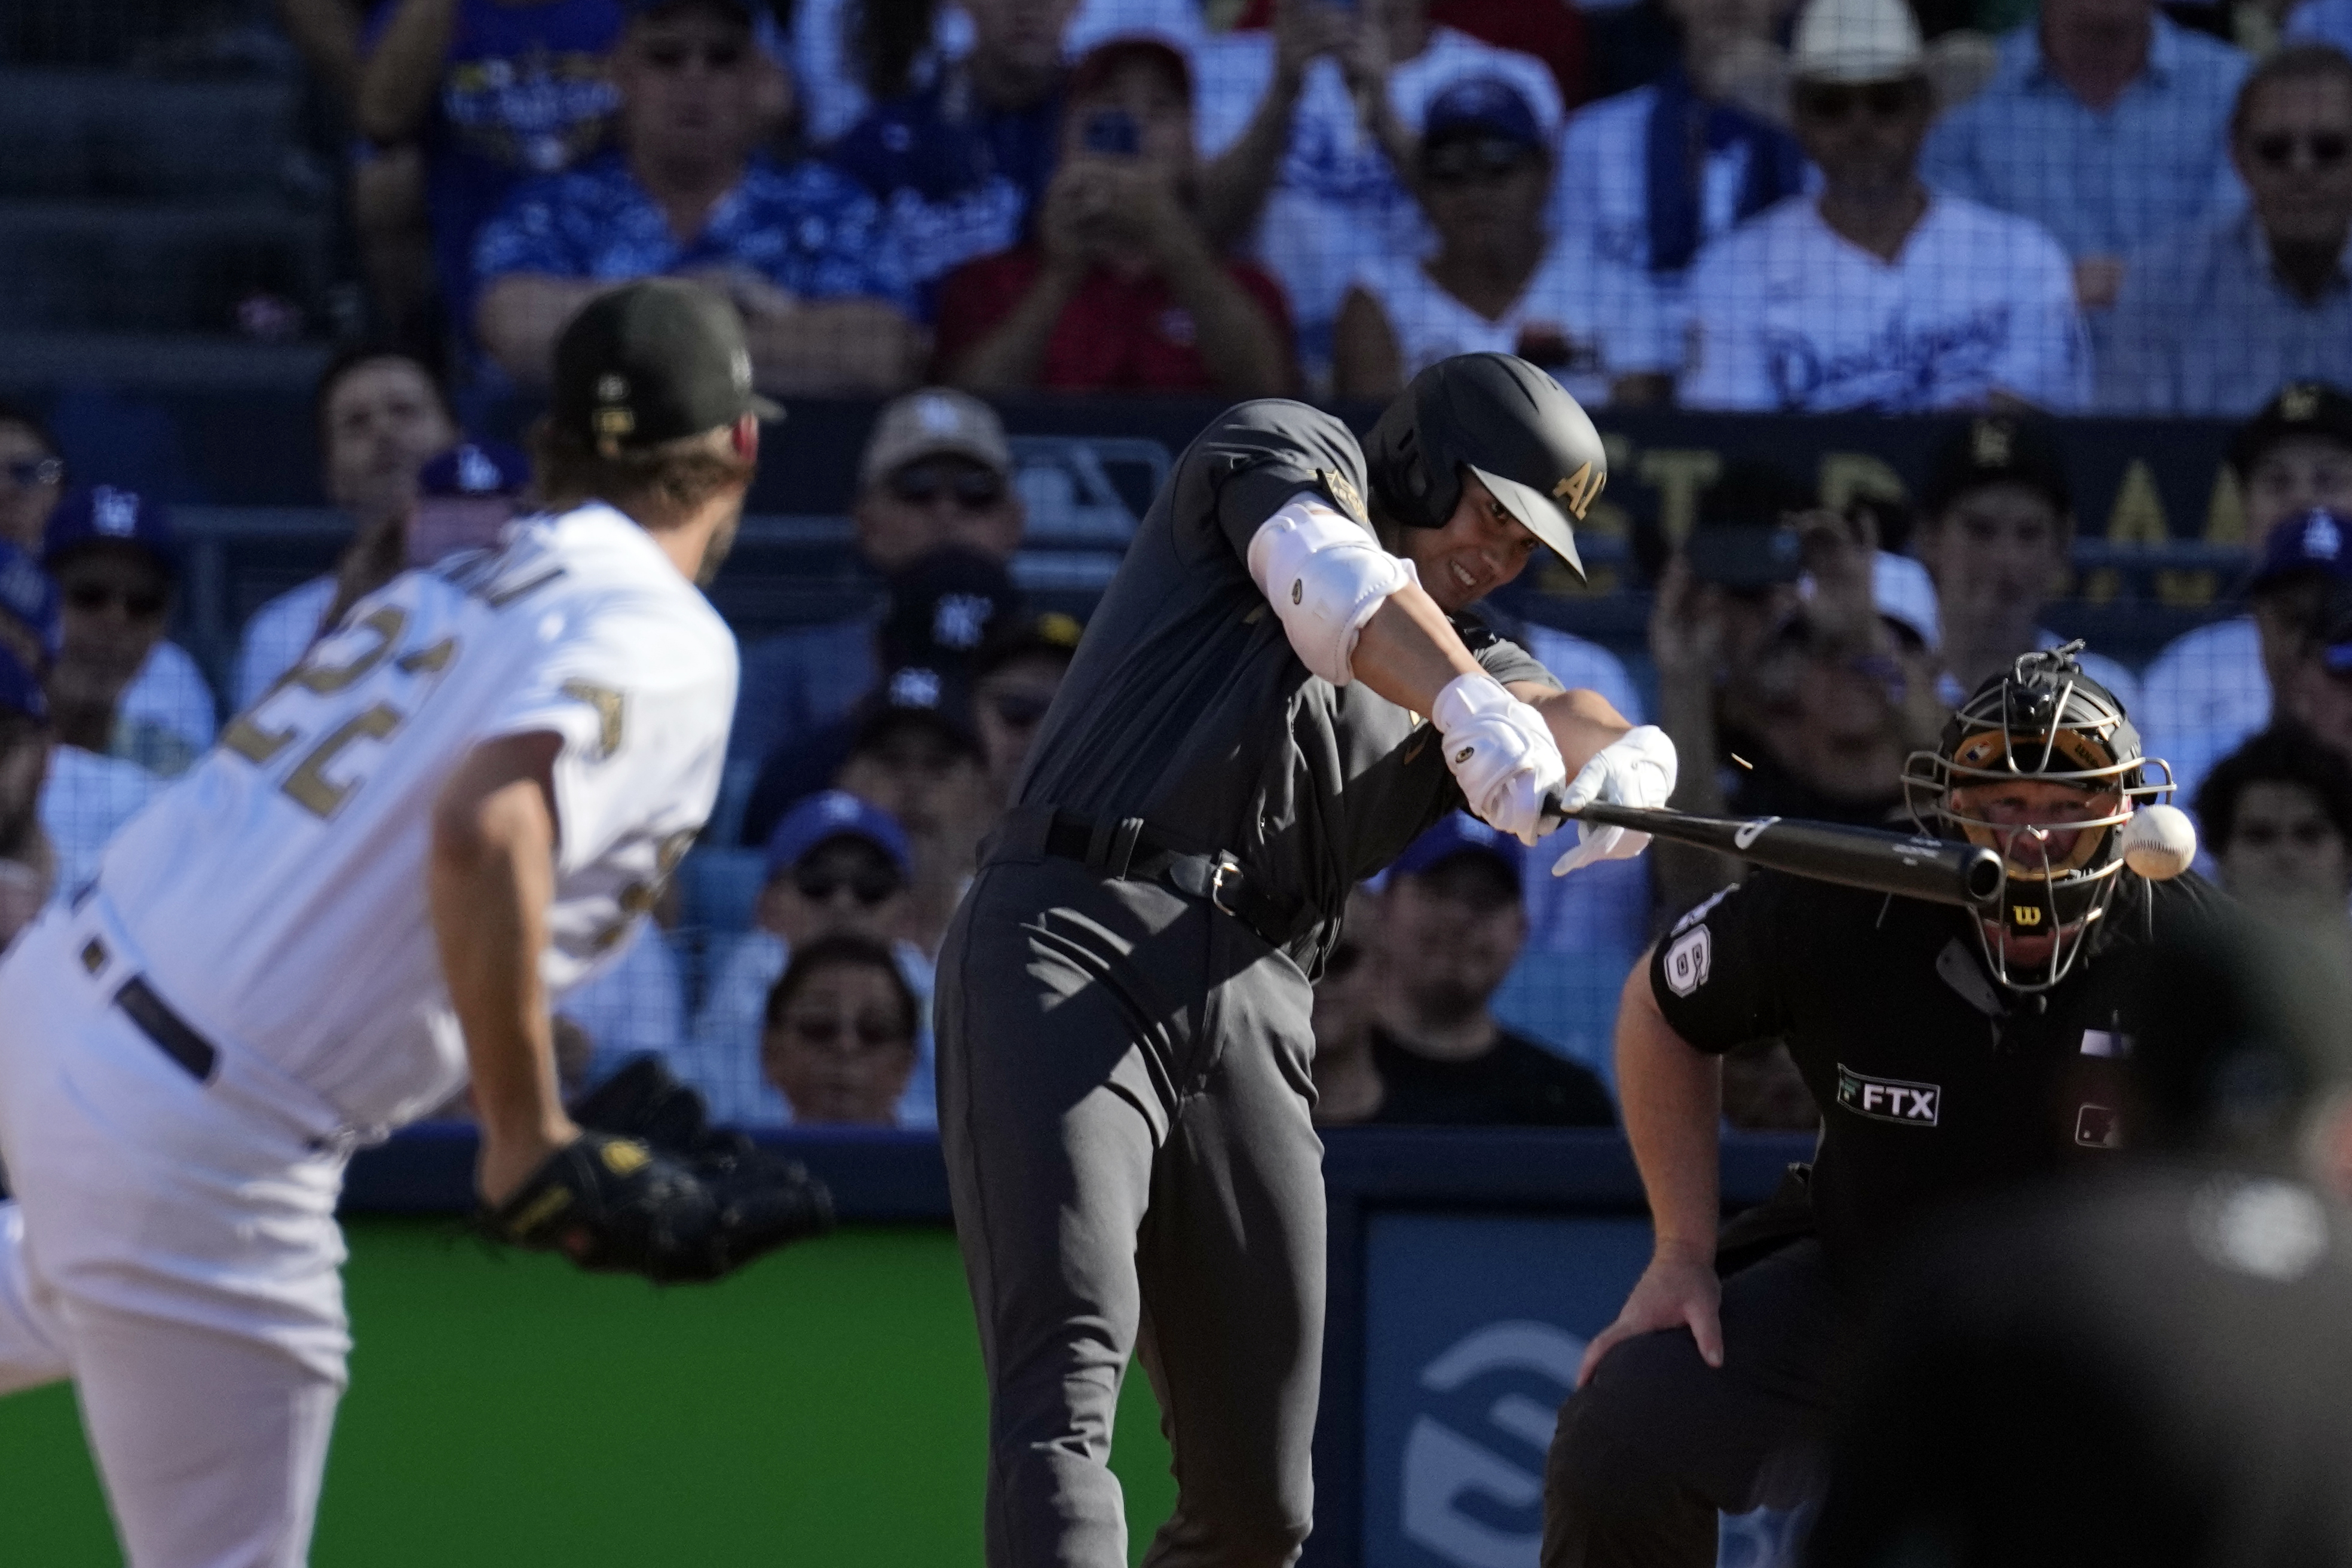 Yankees' Aaron Judge tops Angels' Shohei Ohtani for 2022 American